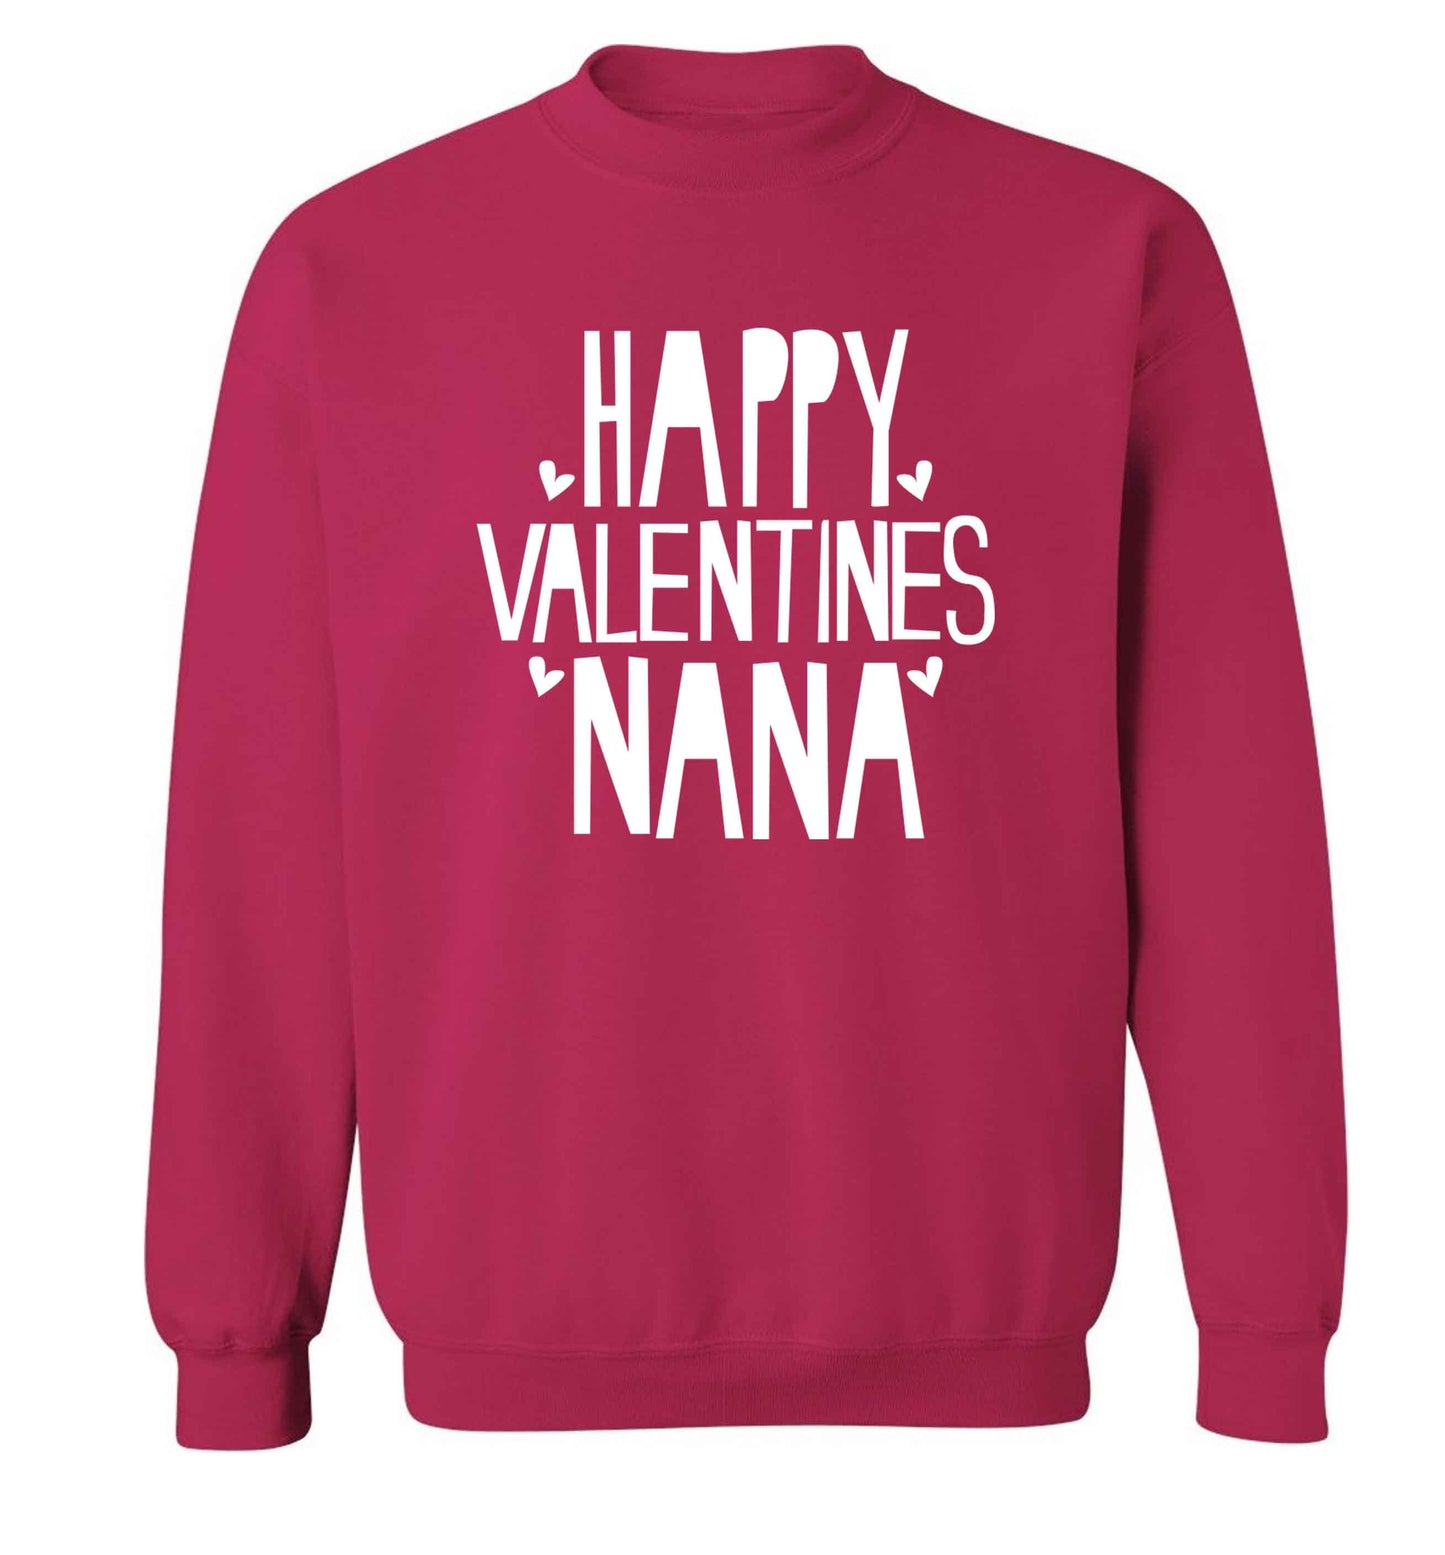 Happy valentines nana adult's unisex pink sweater 2XL